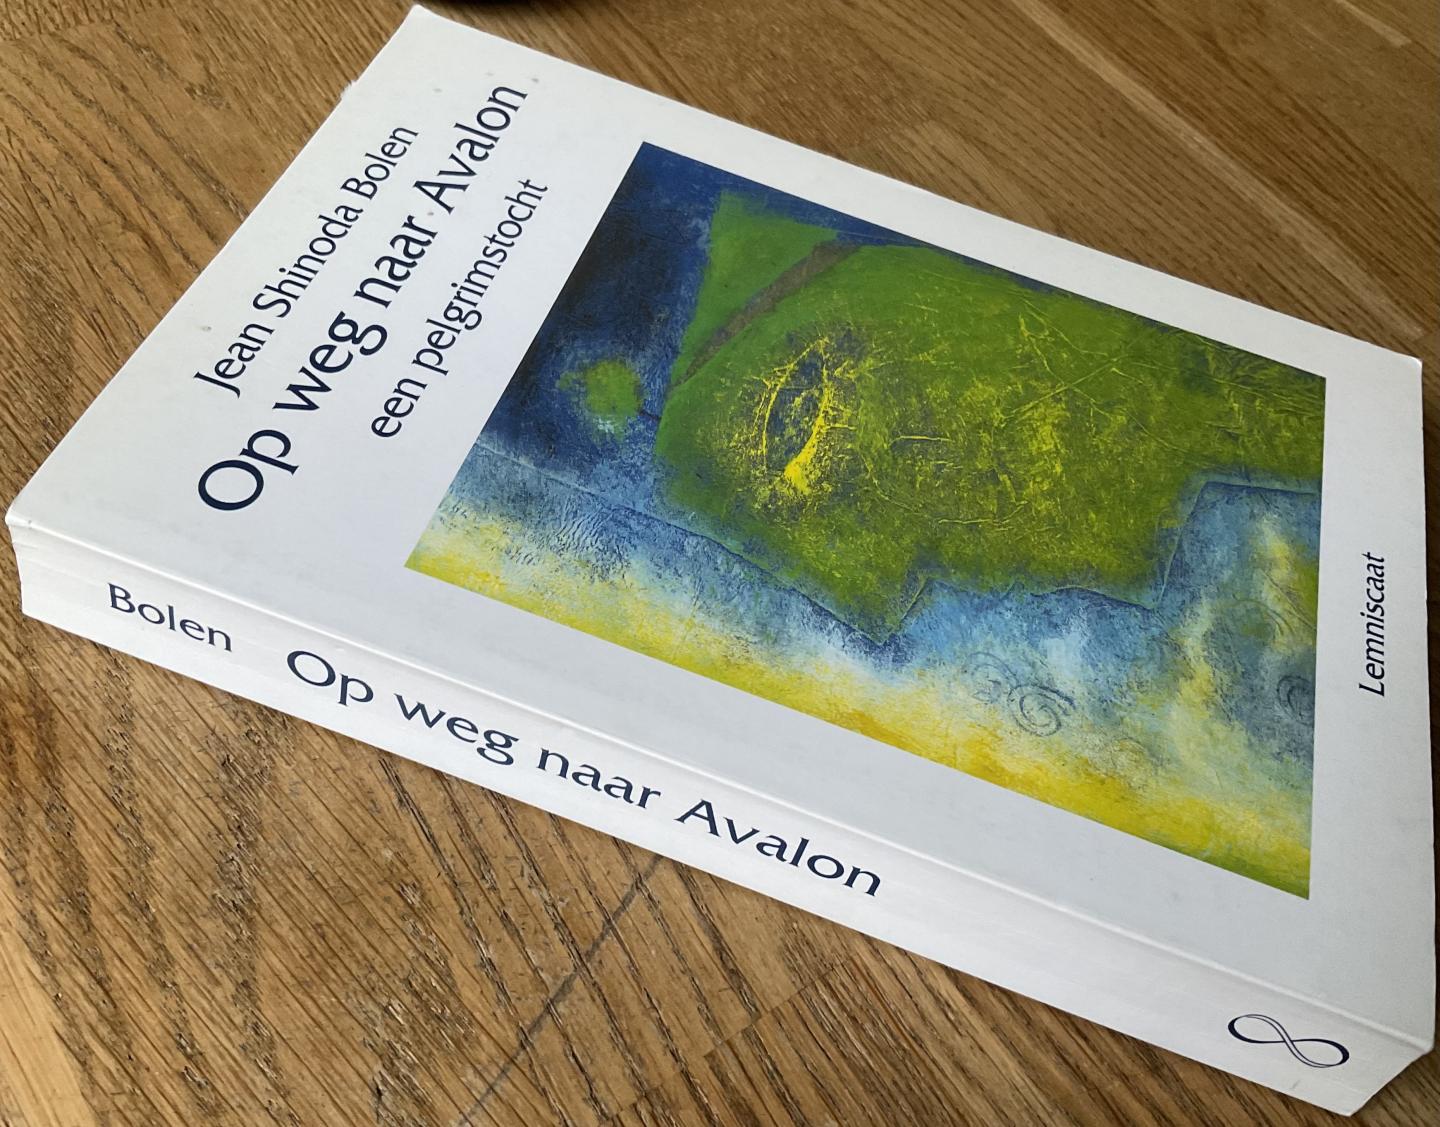 Bolen, Jean Shinoda - Op weg naar Avalon, een pelgrimstocht (3e druk)